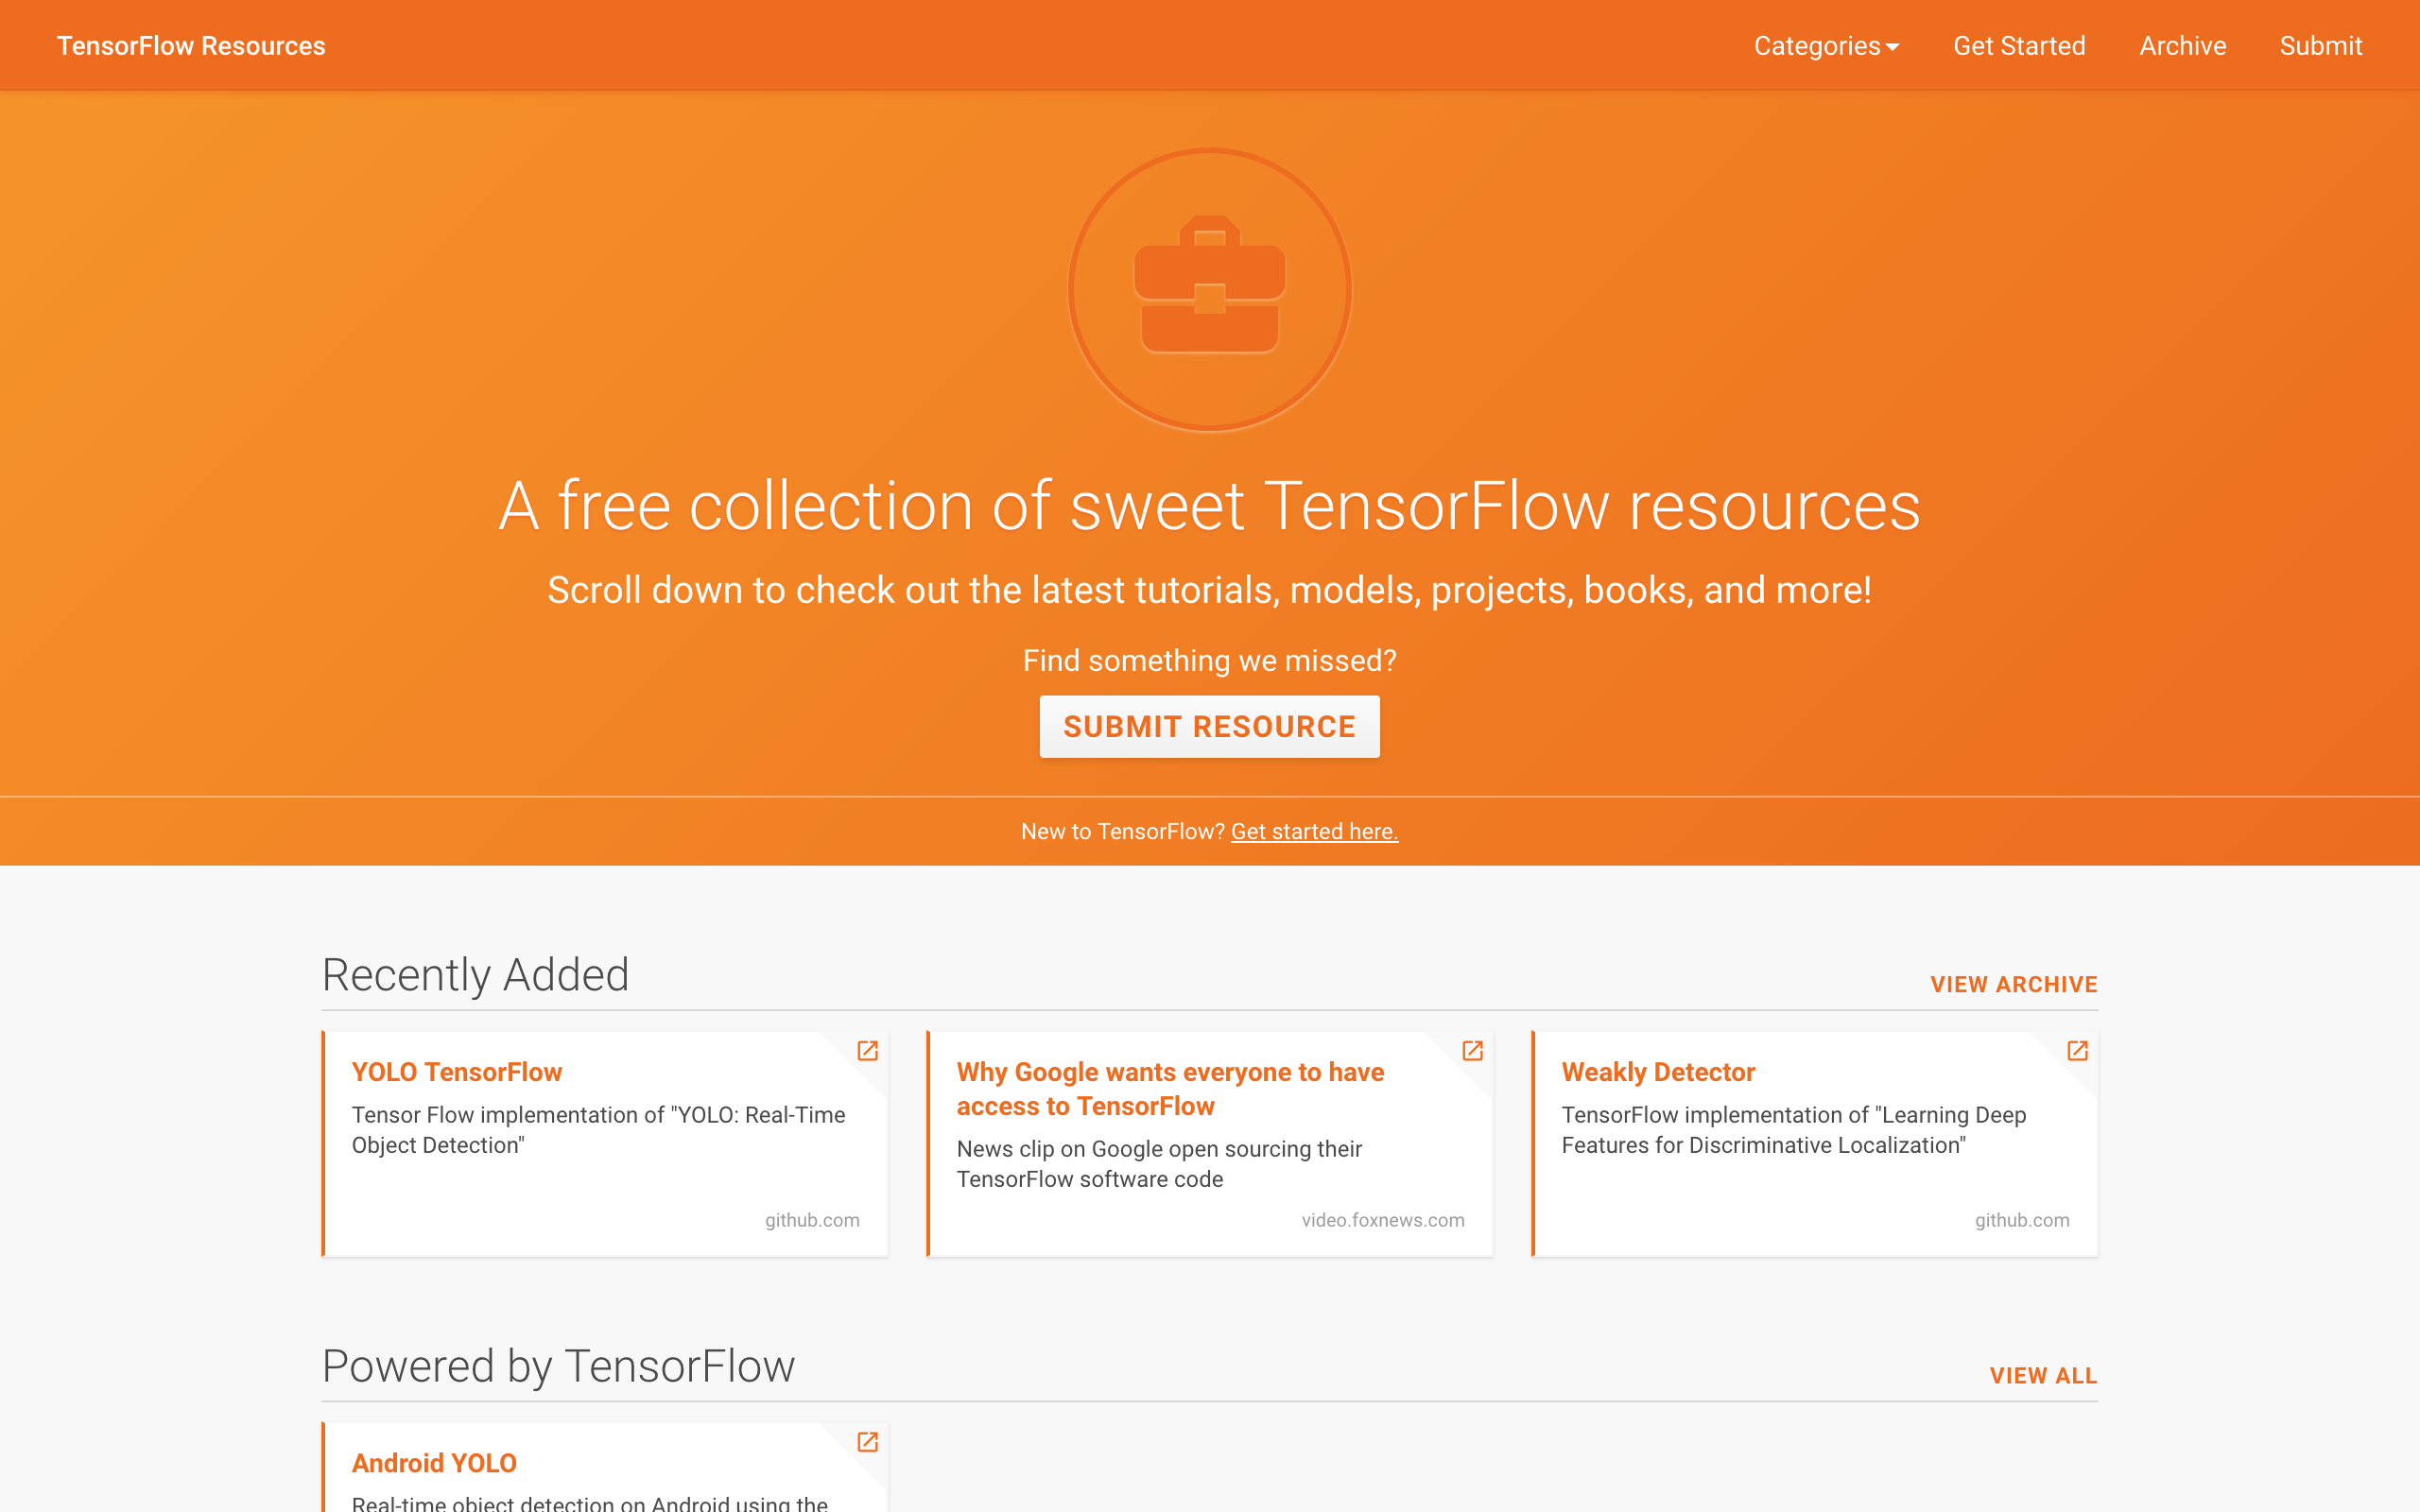 TensorFlow Resources homepage